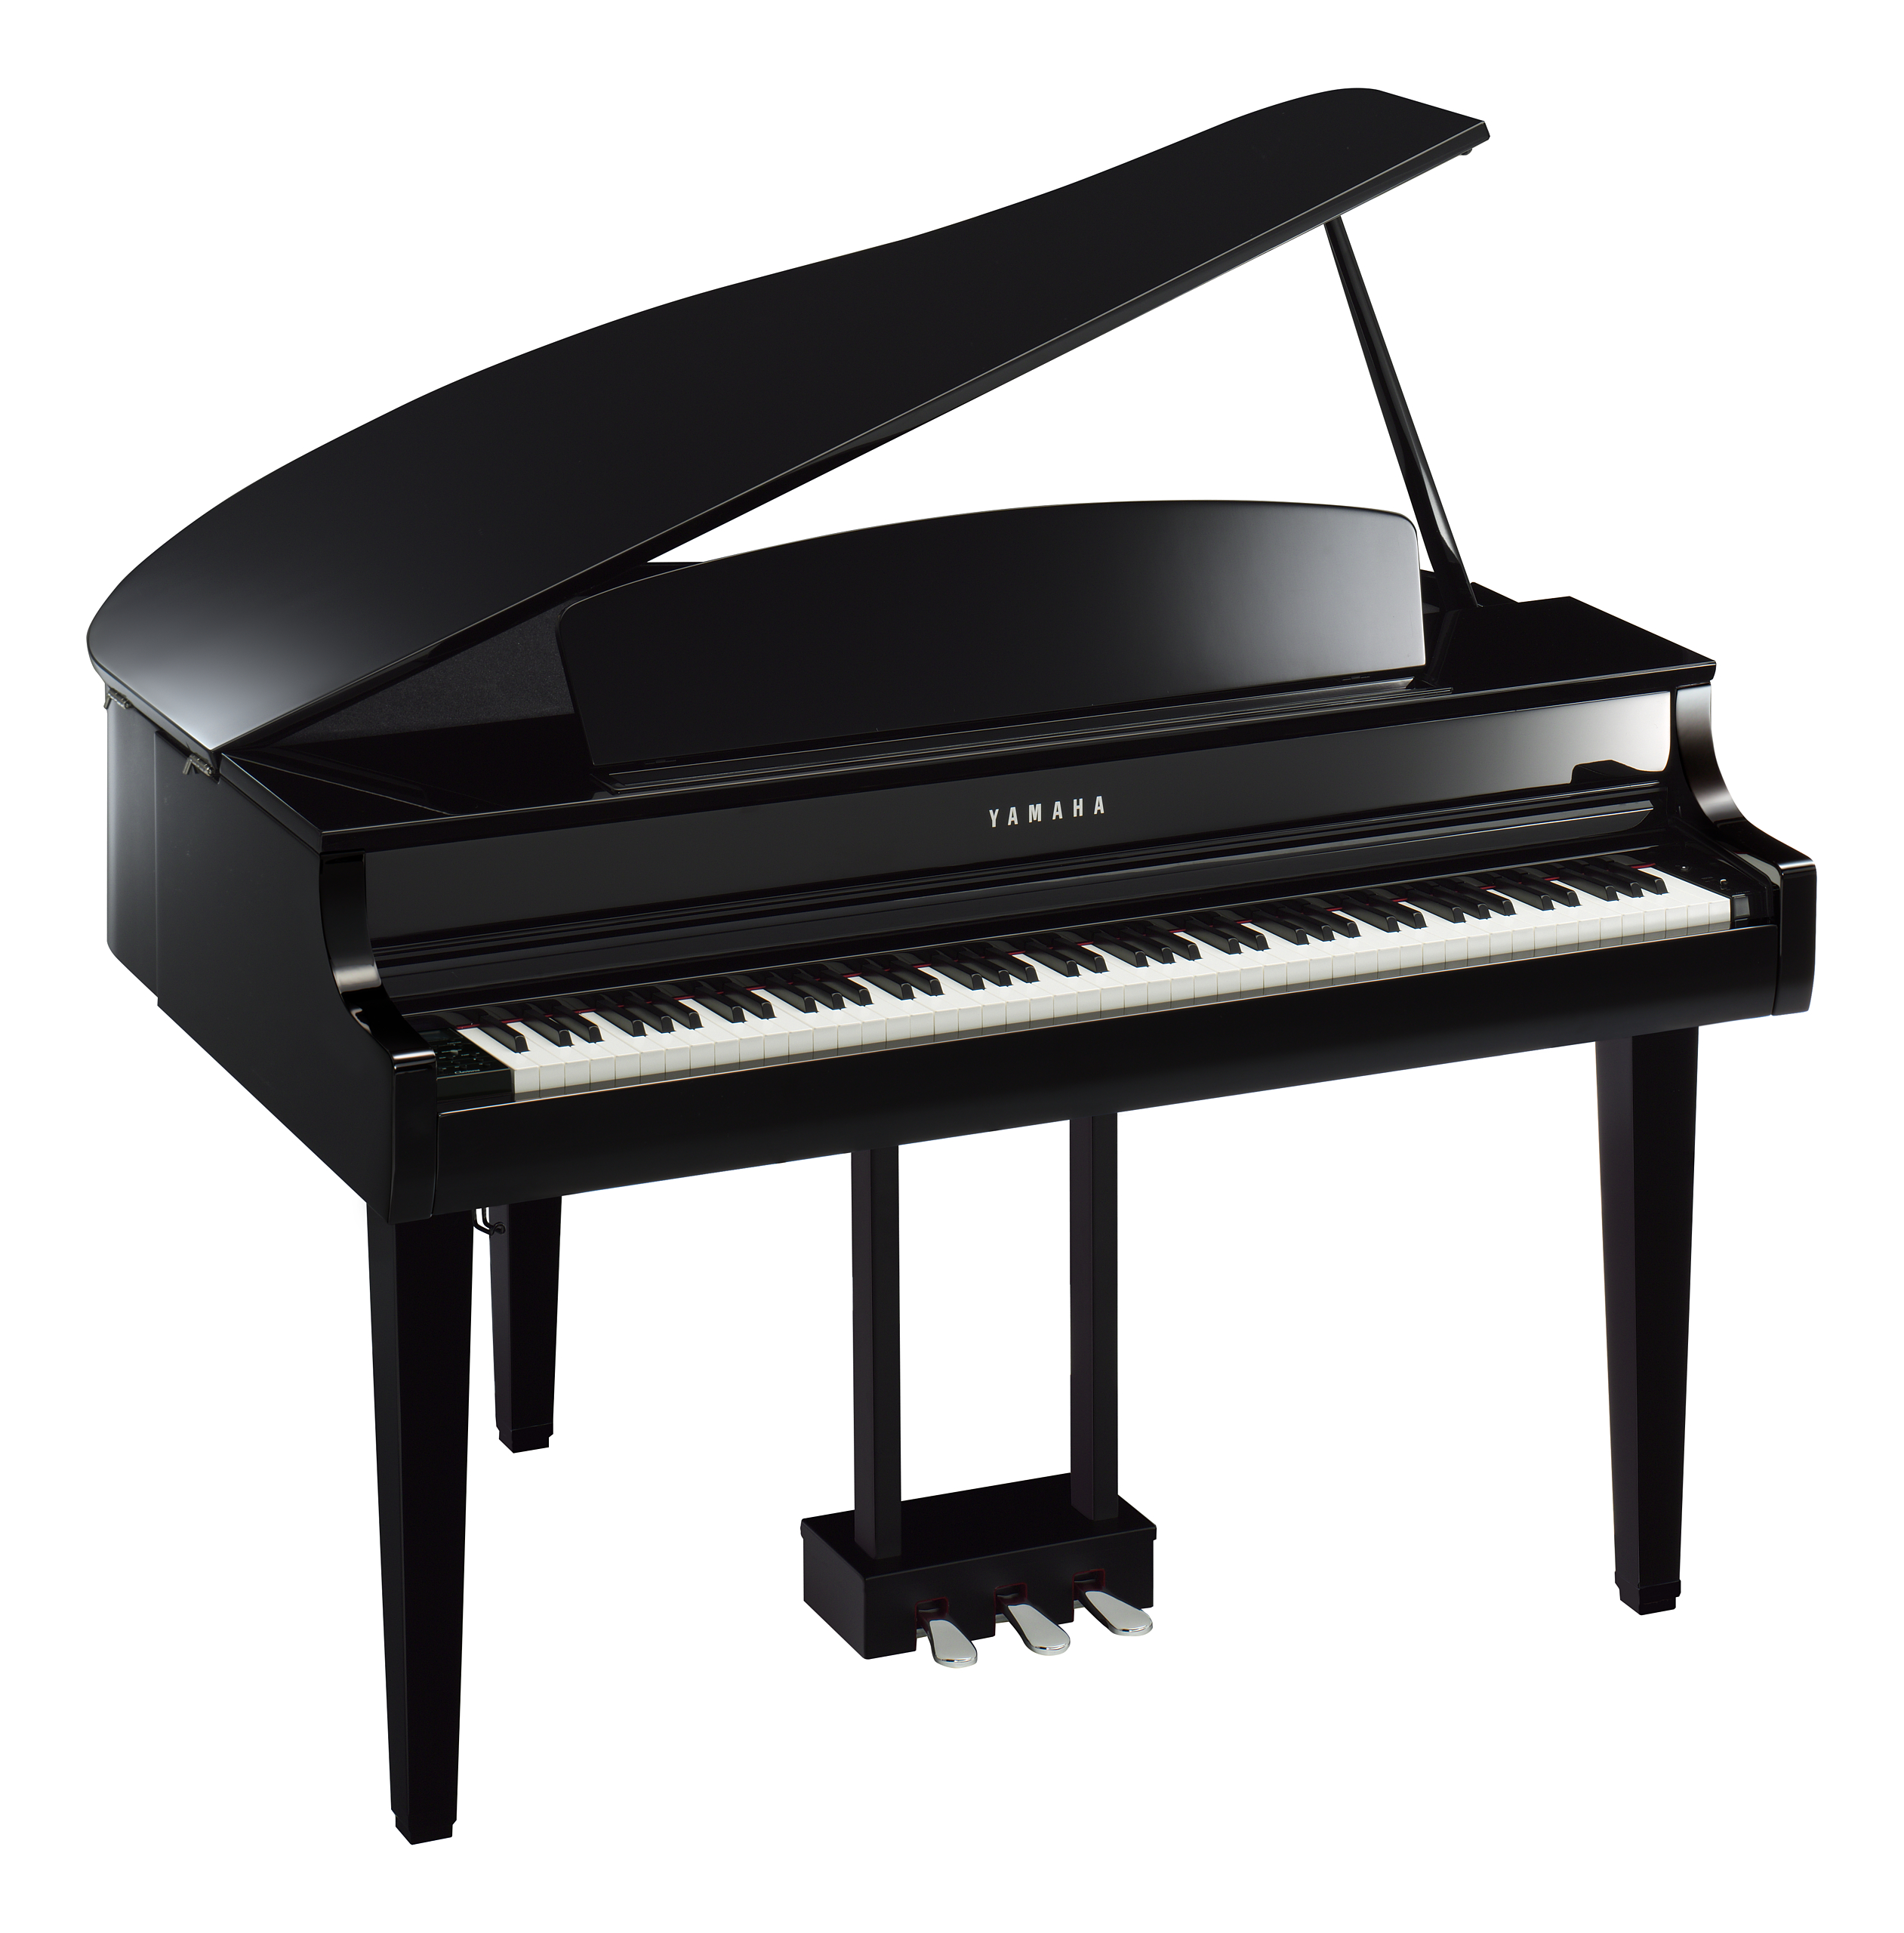 Yamaha Clp765gp Pe - Digital piano with stand - Variation 1